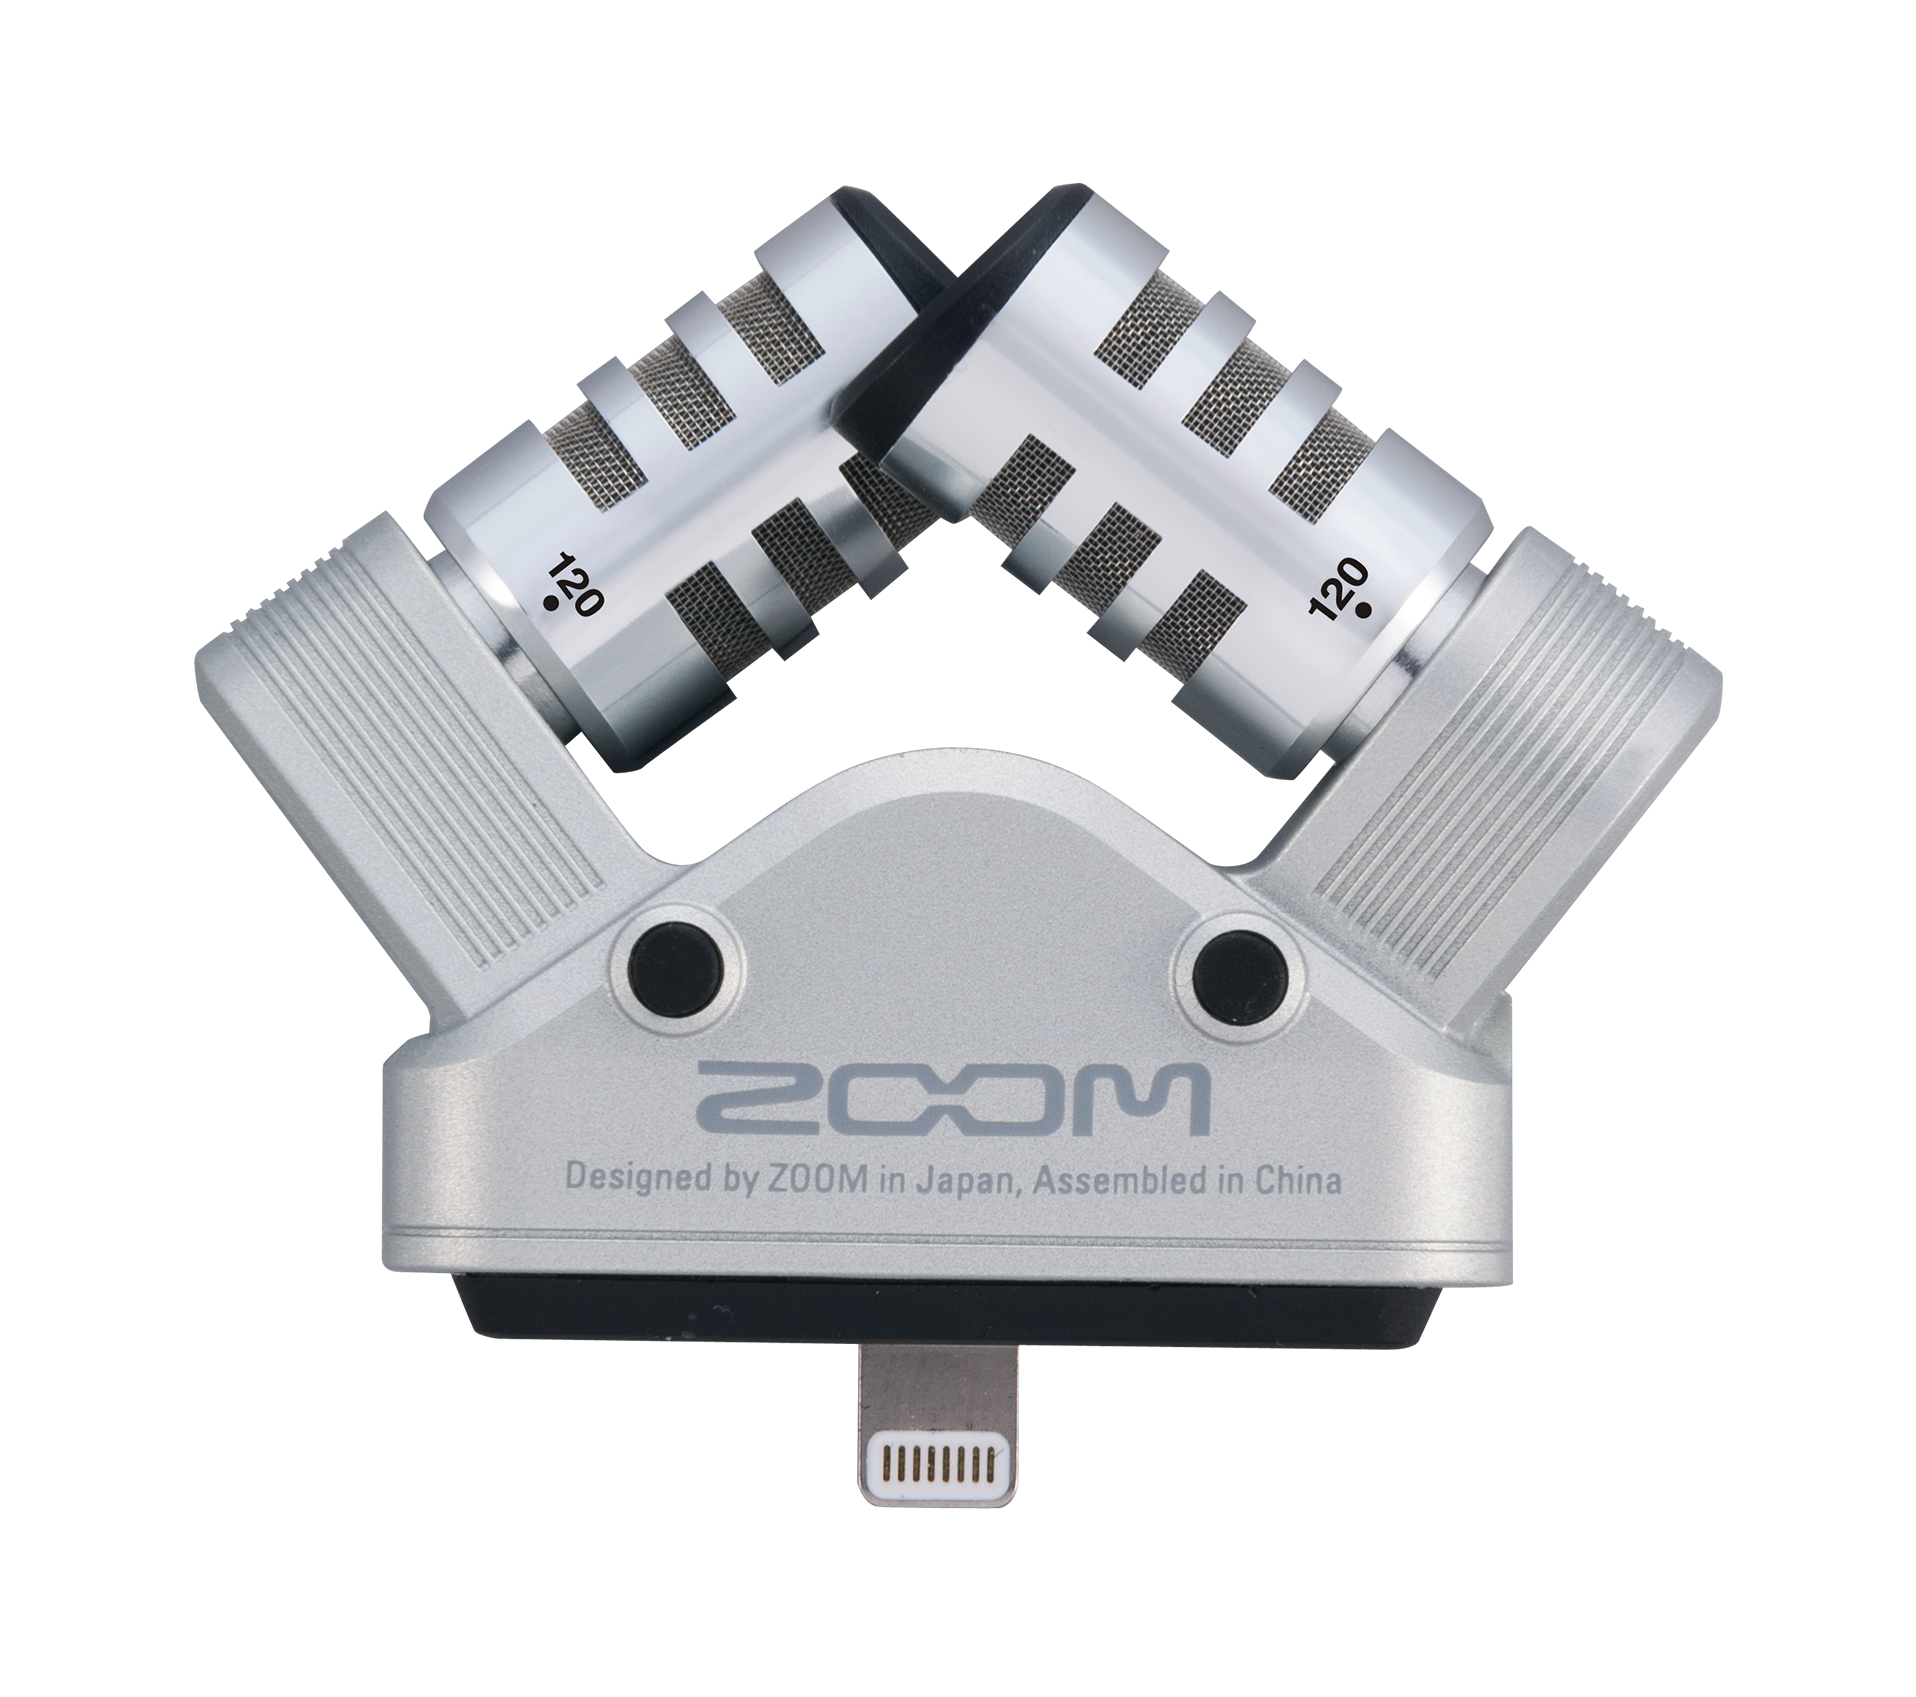 Zoom Iq6 Xy - Micro USB & smartphone - Variation 5